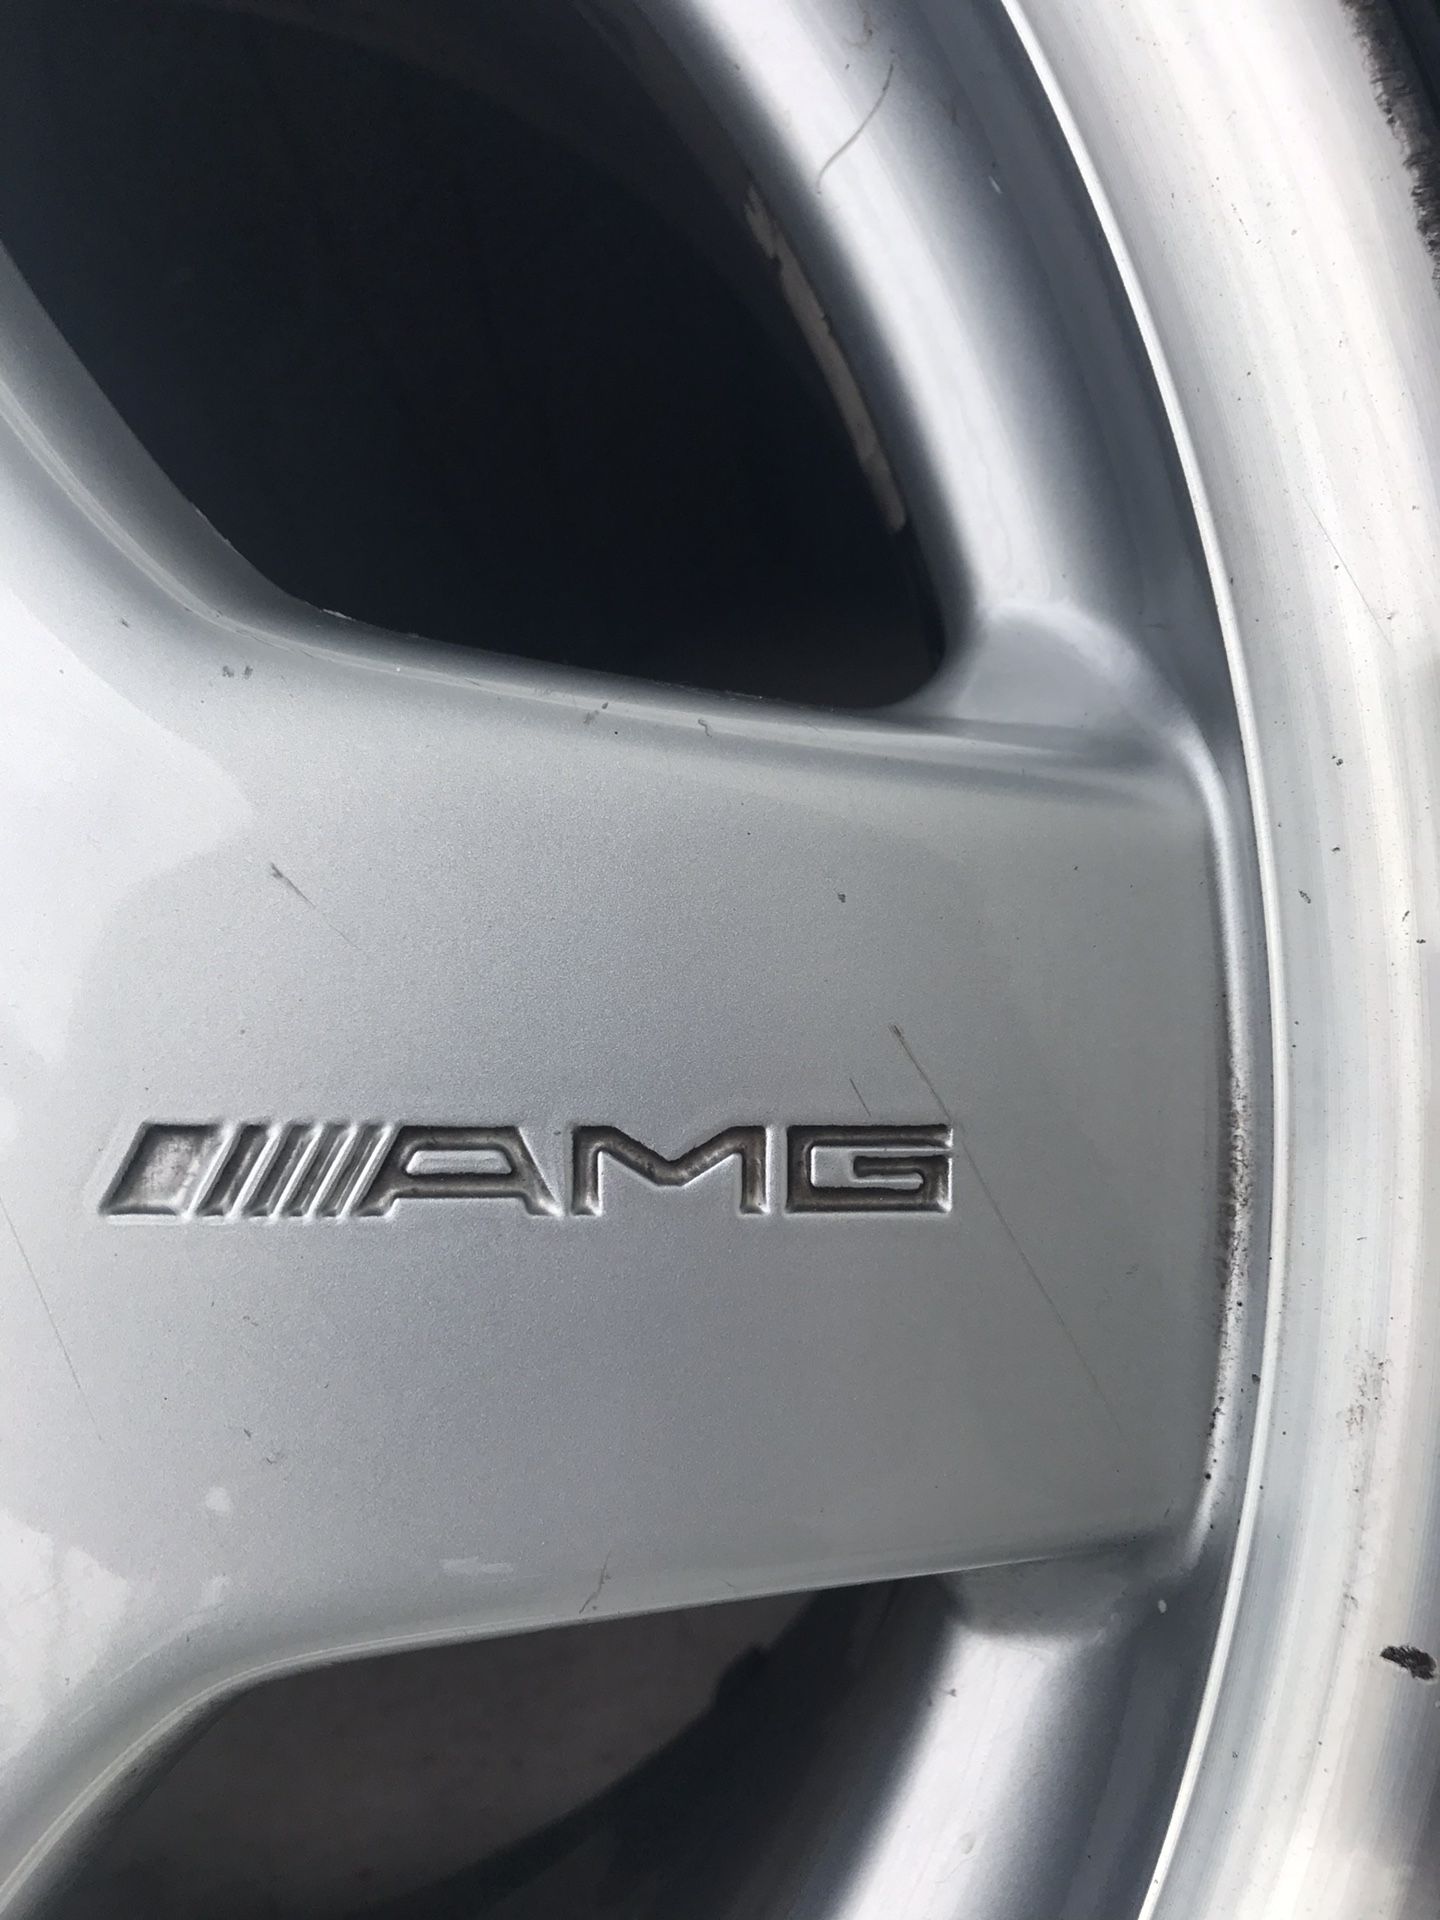 Mercedes Benz AMG 18” inch rims wheels tires